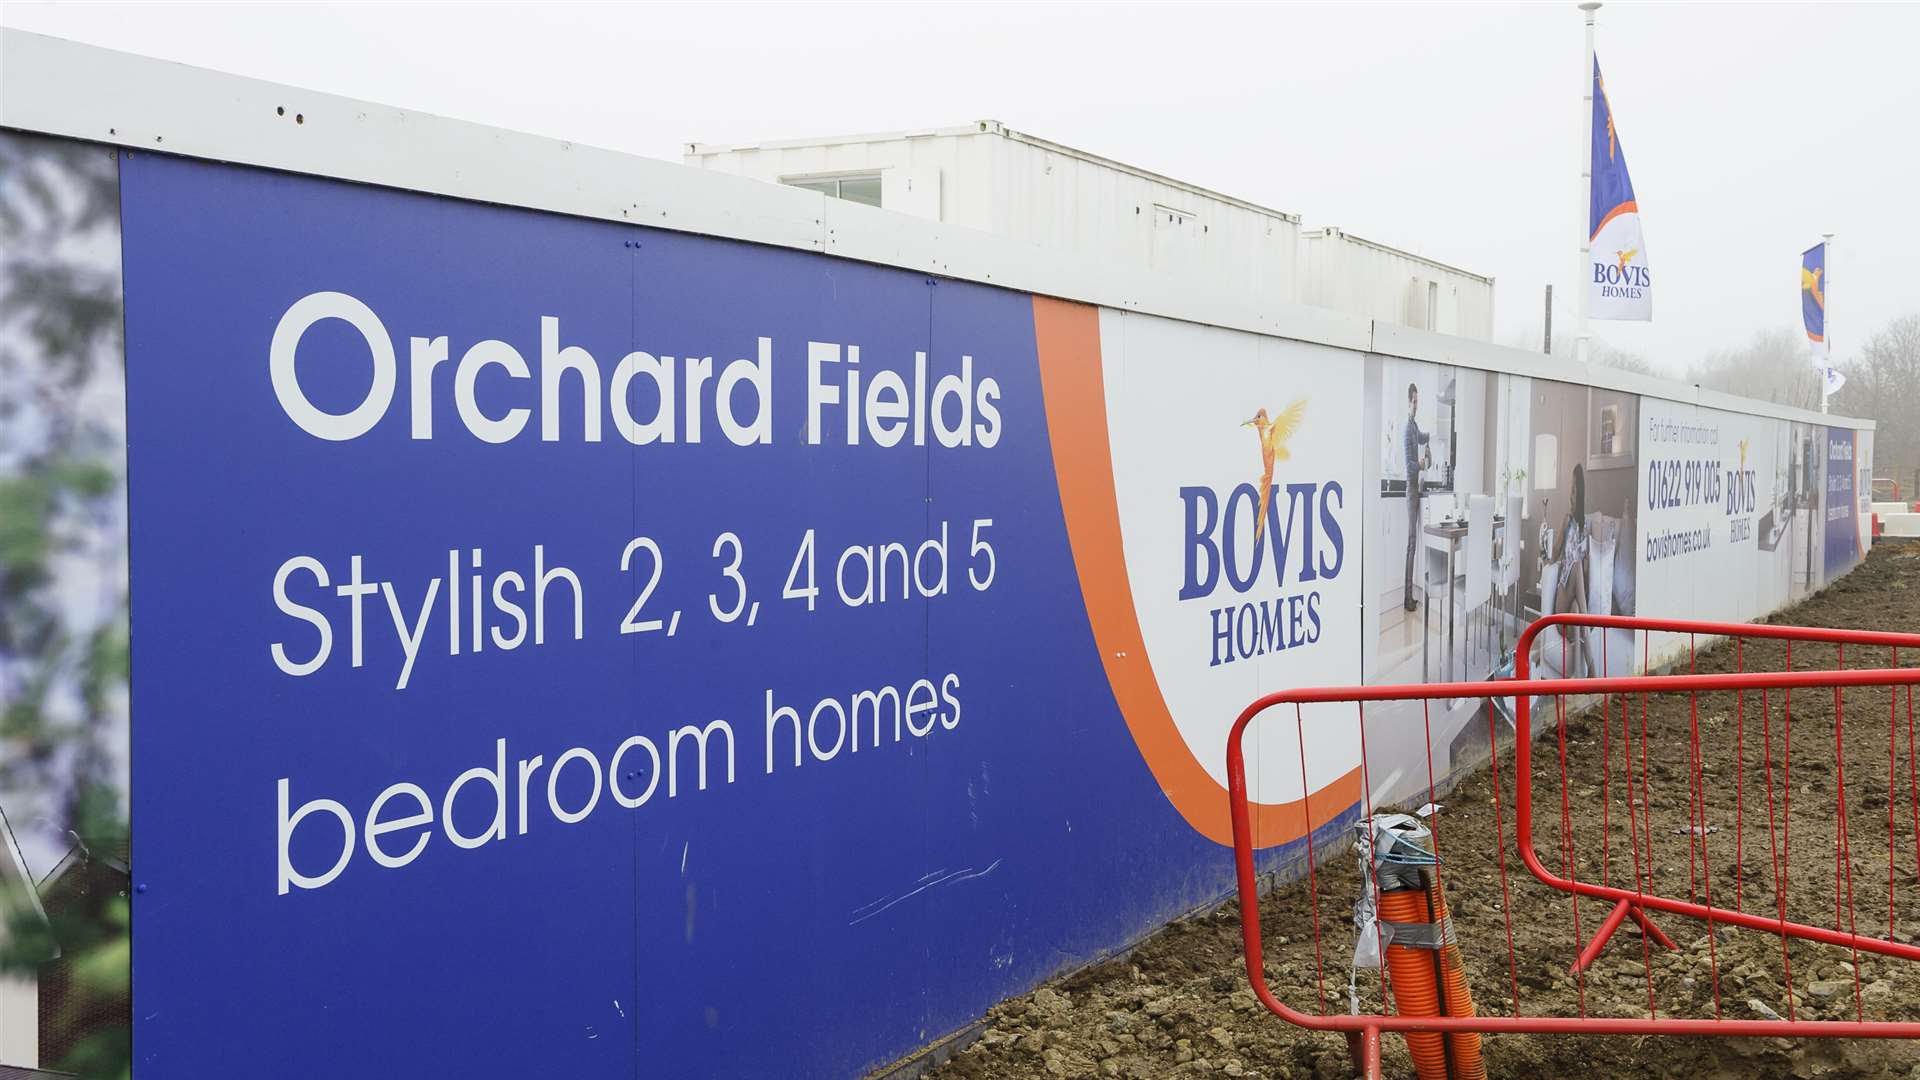 Bovis Homes has built the Orchard Fields development near Maidstone